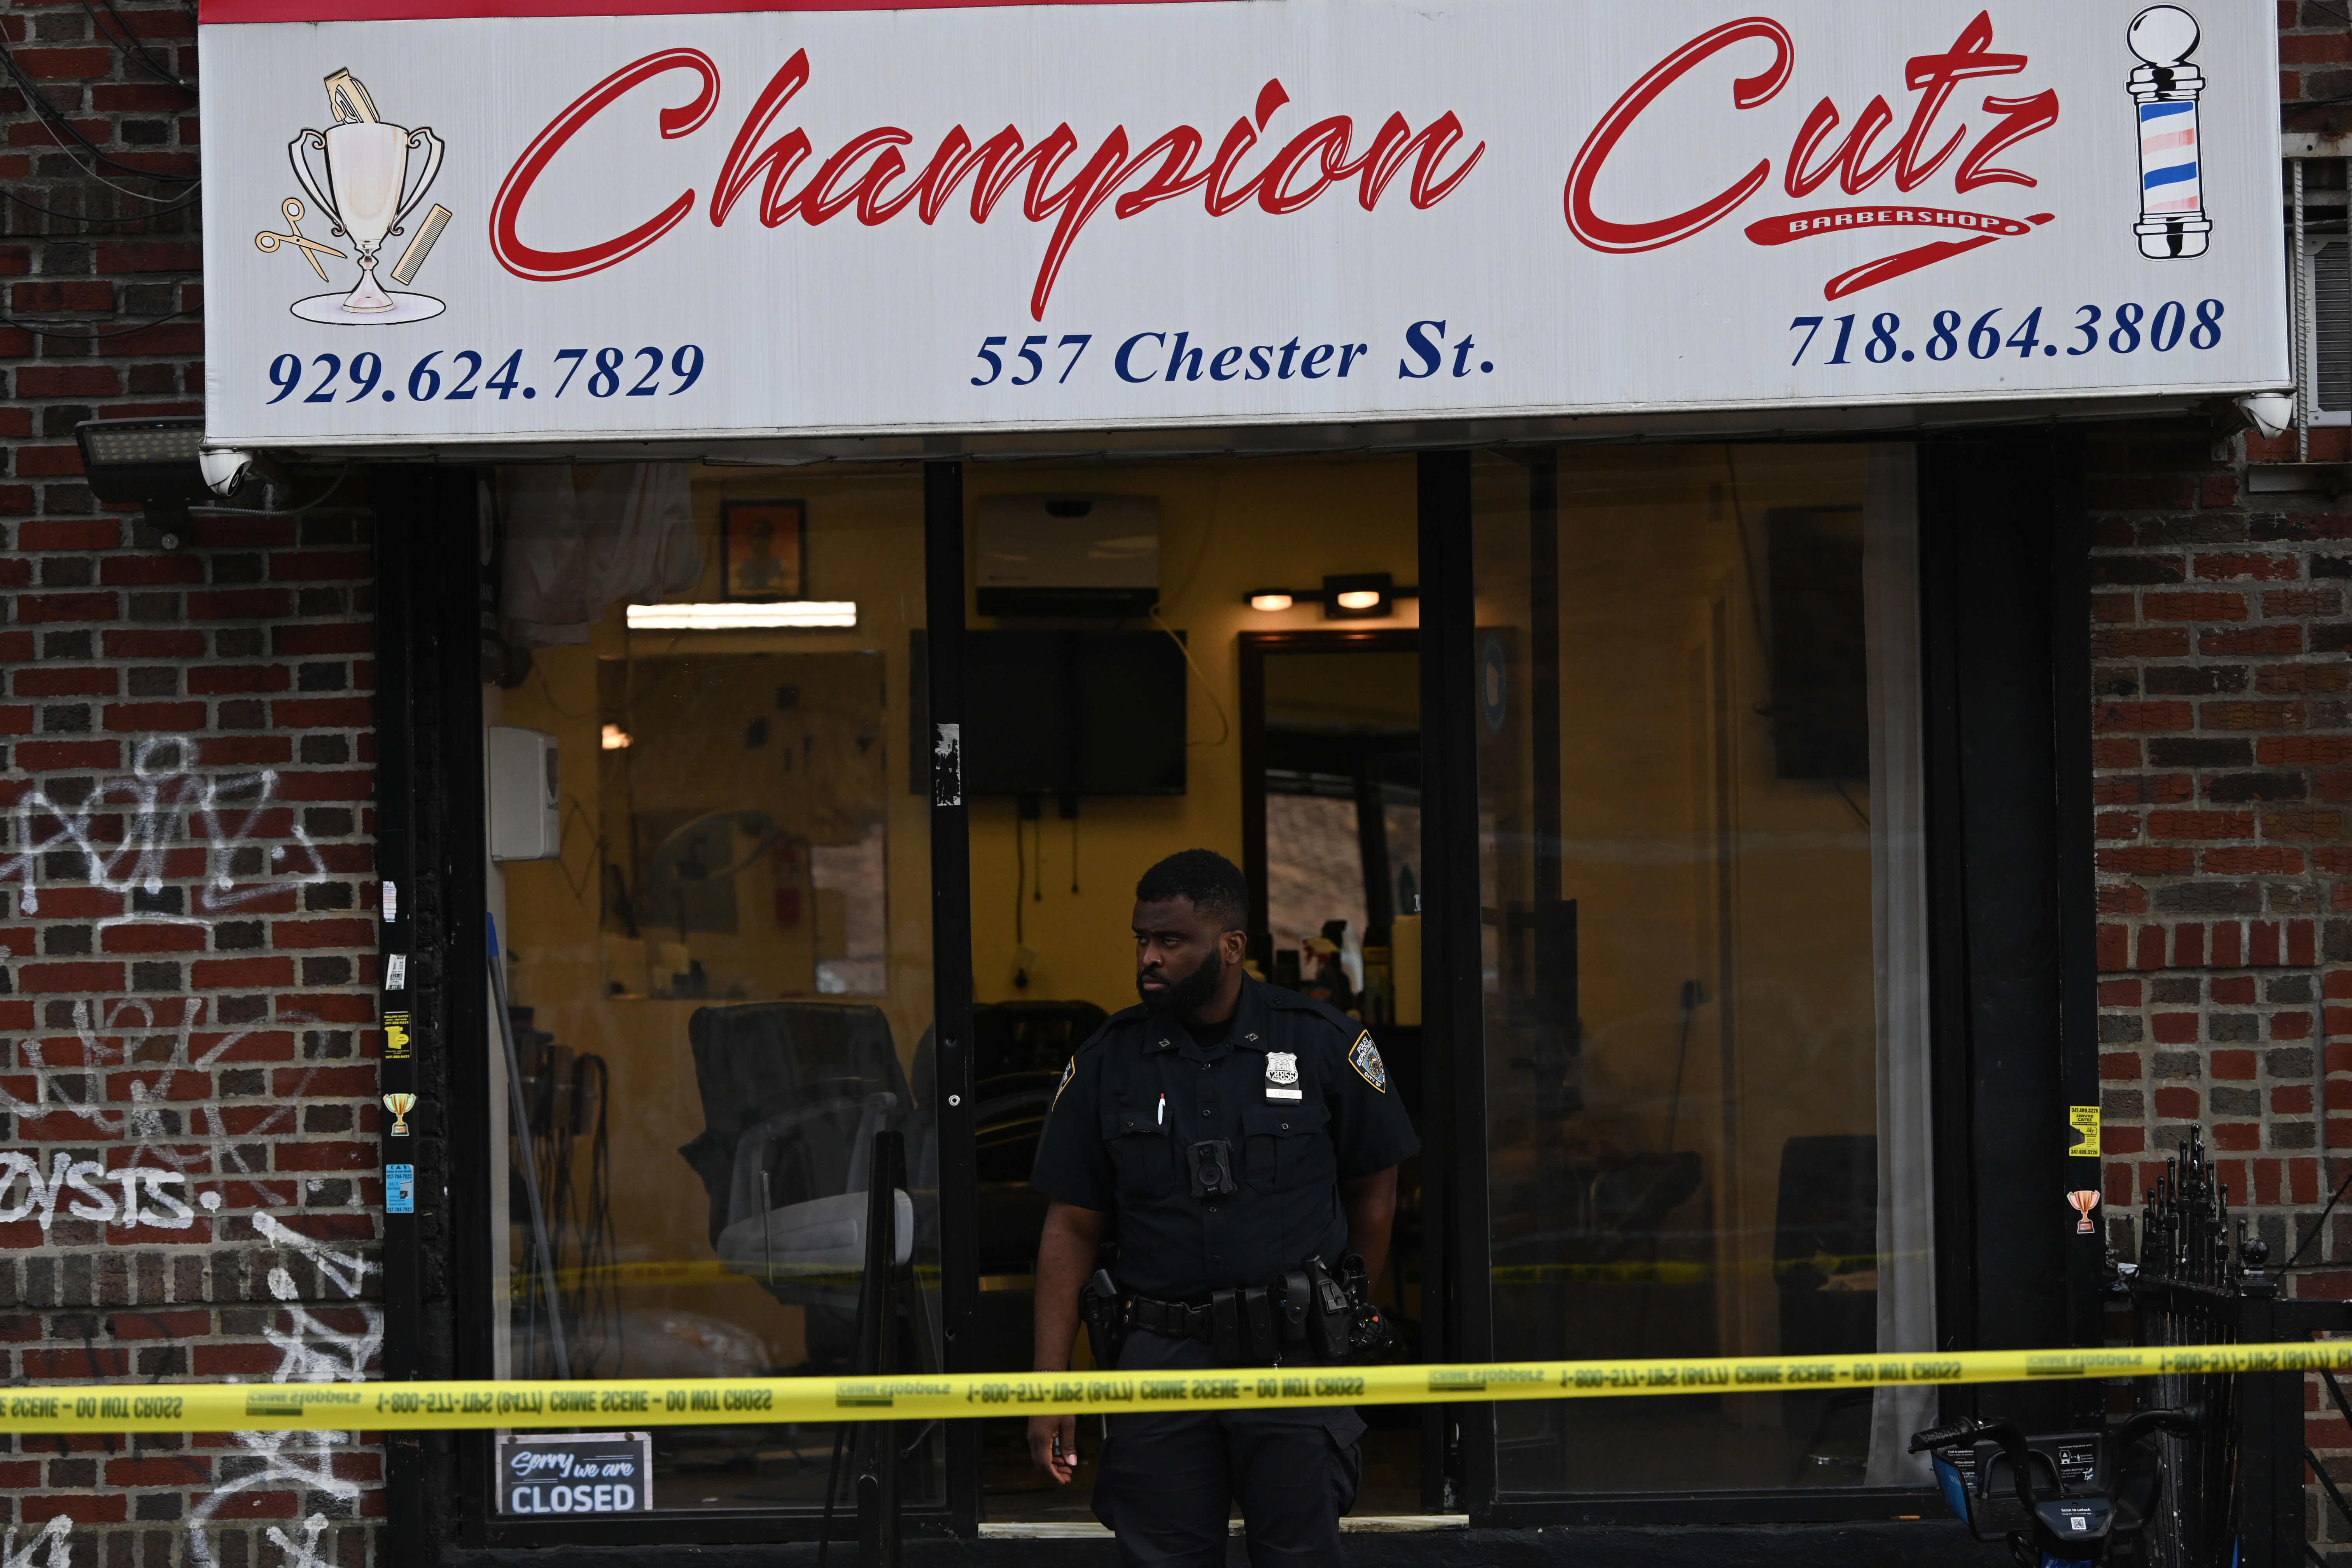 Ontdekking Enten aankomst Two shot in Brownsville barber shop: NYPD • Brooklyn Paper